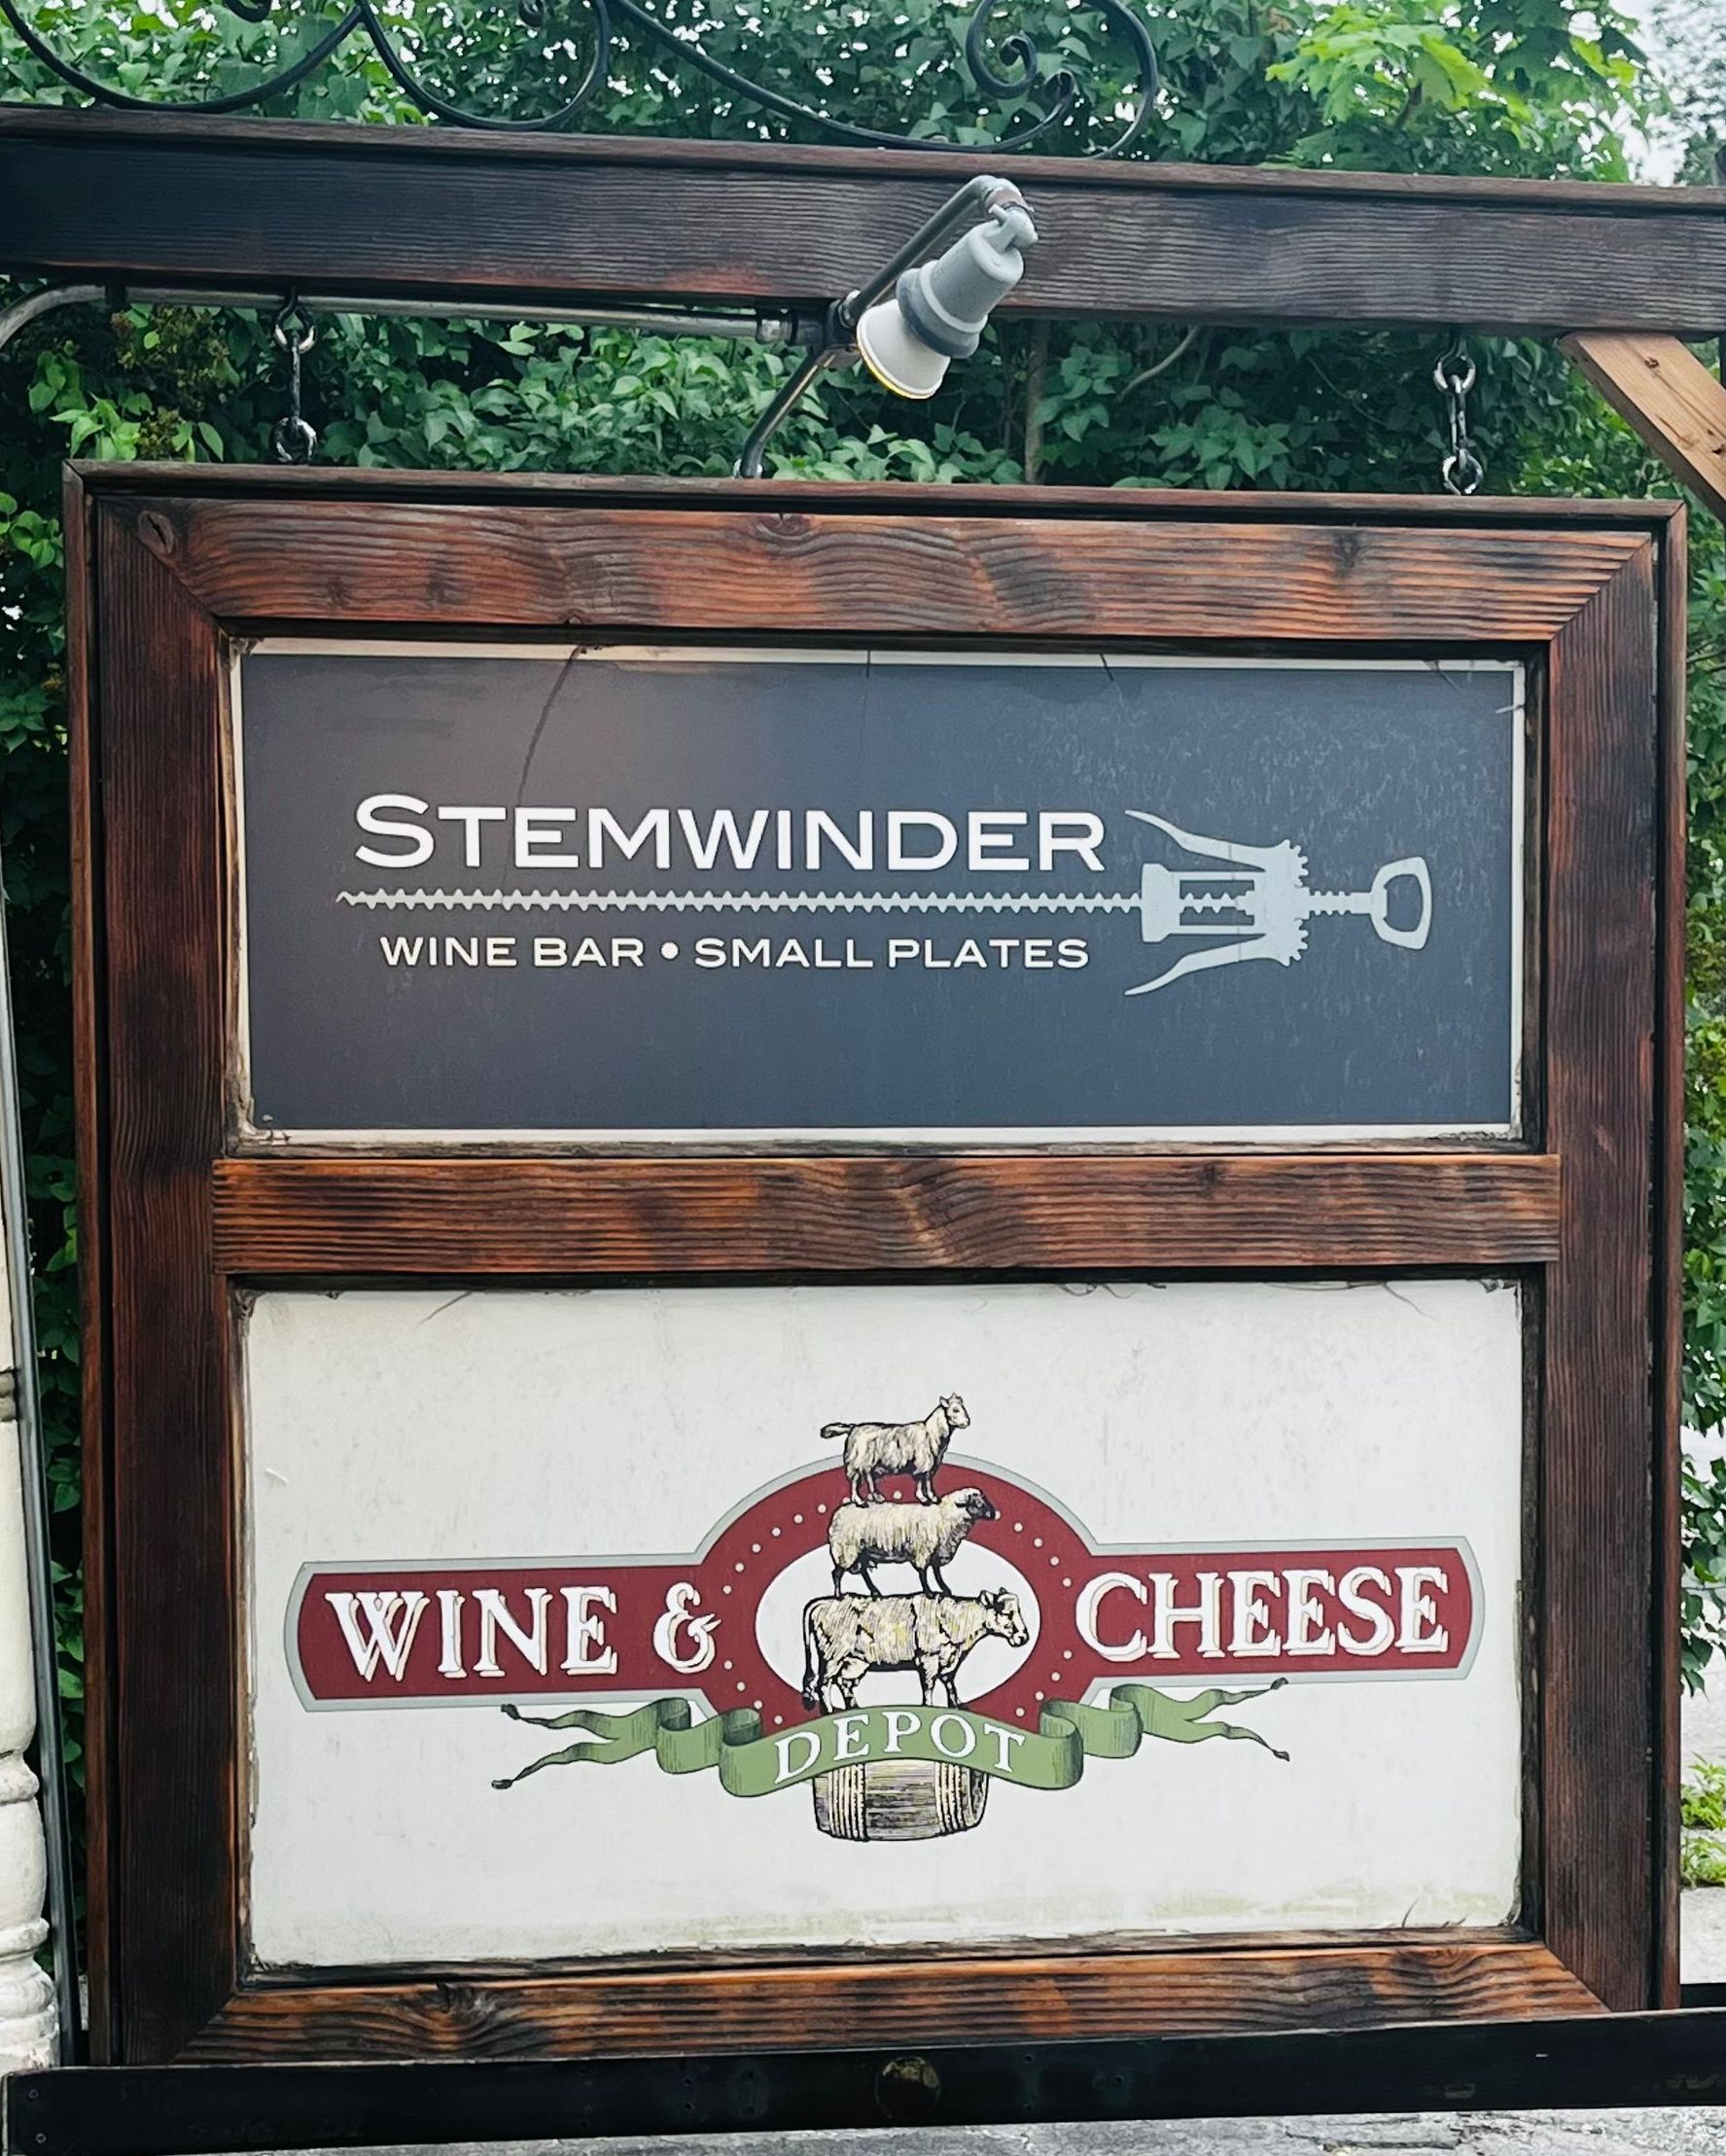 Wine & Cheese Depot in Ludlow, VT with wine bar, Stemwinder next door.